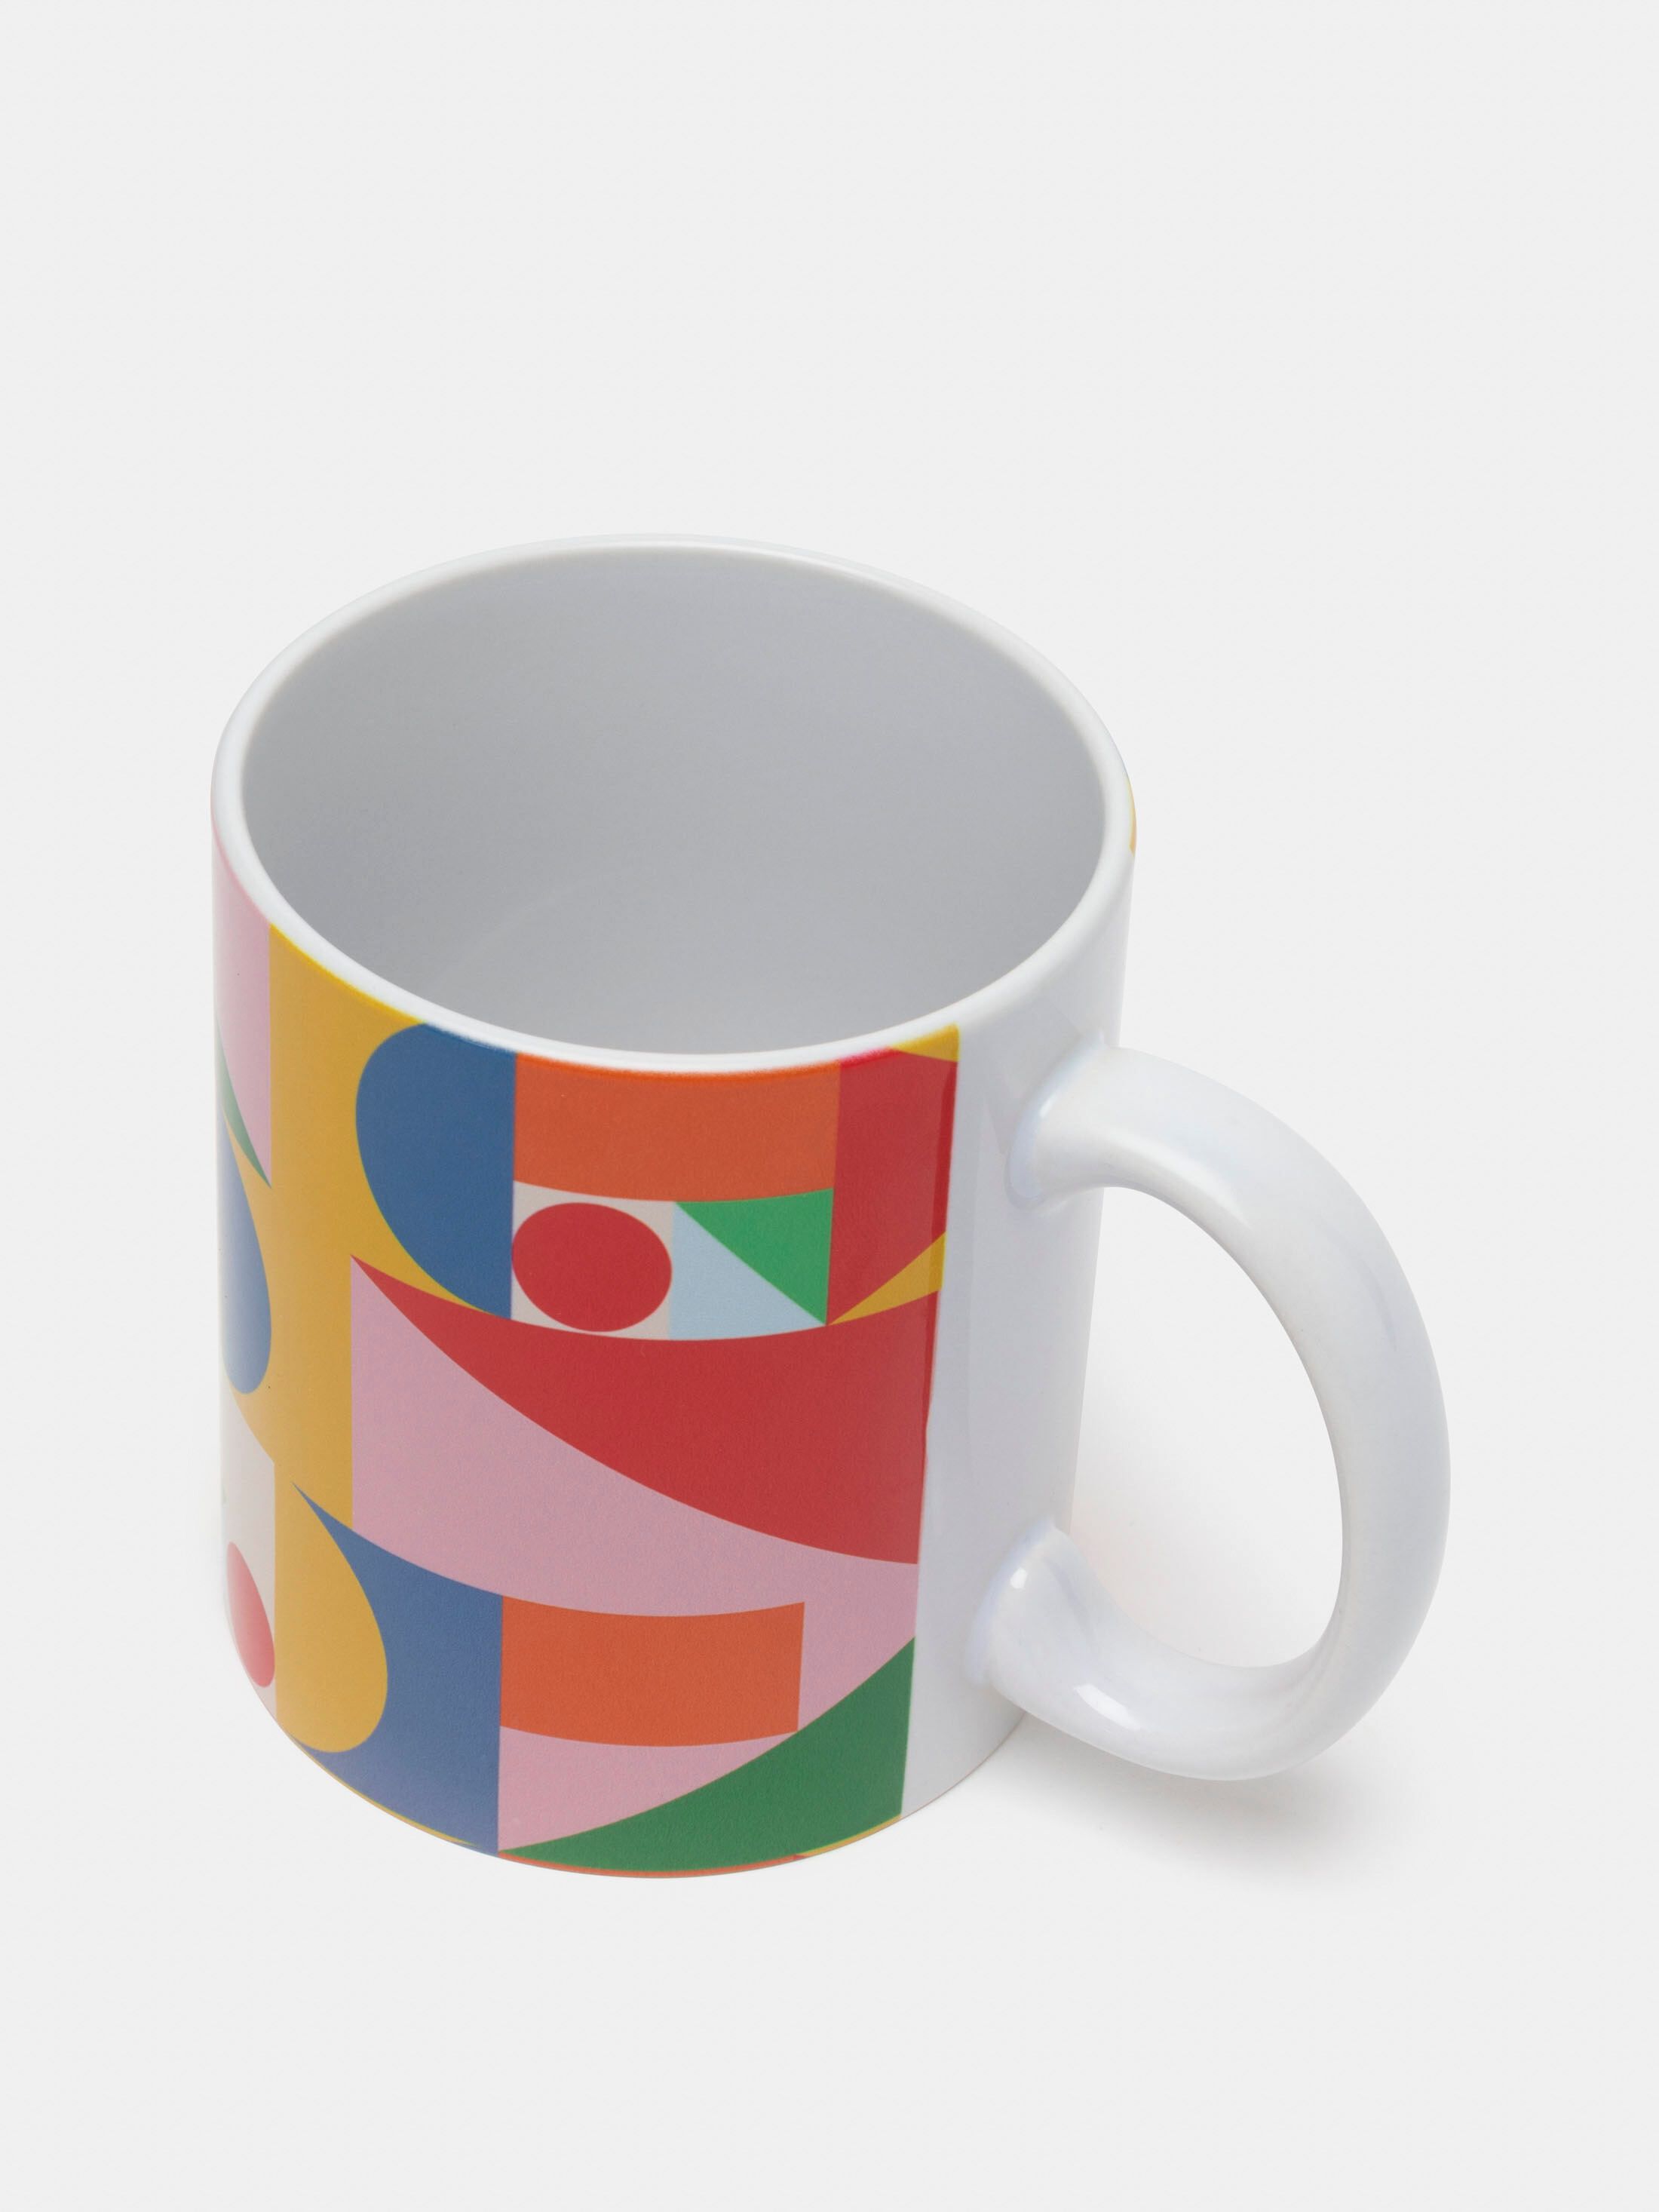 Design your own mug